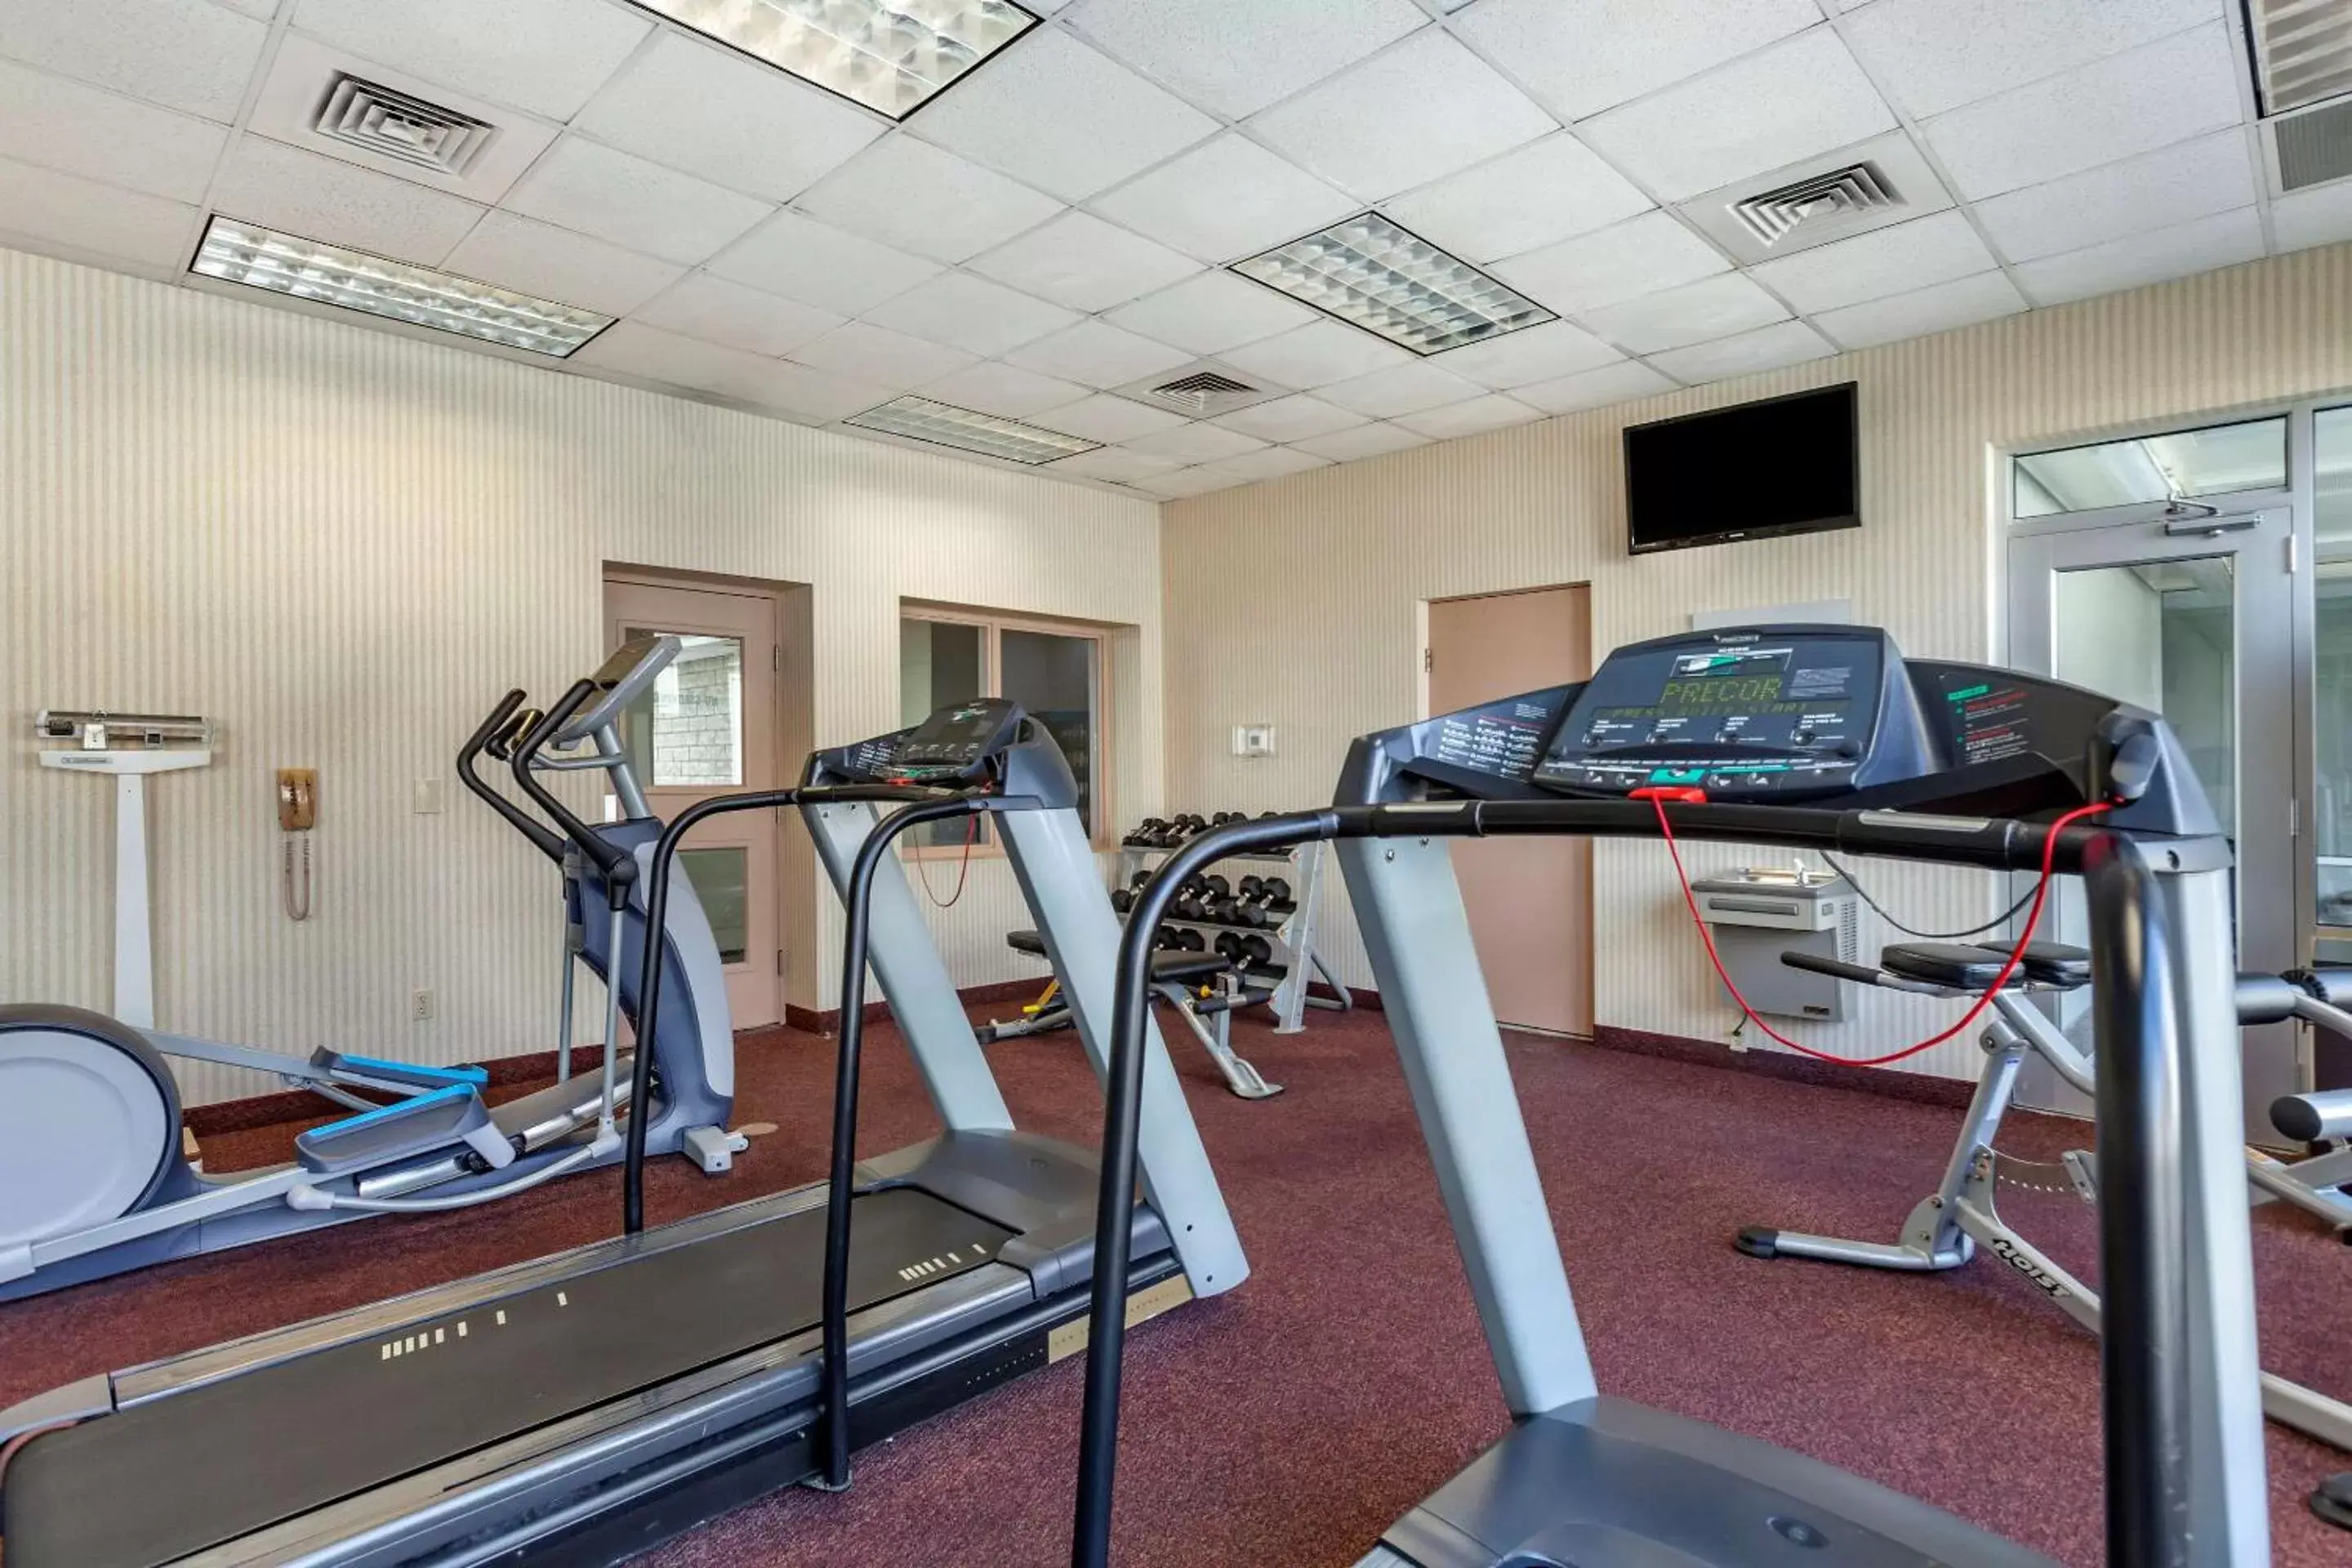 Fitness centre/facilities, Fitness Center/Facilities in Clarion Inn Ontario